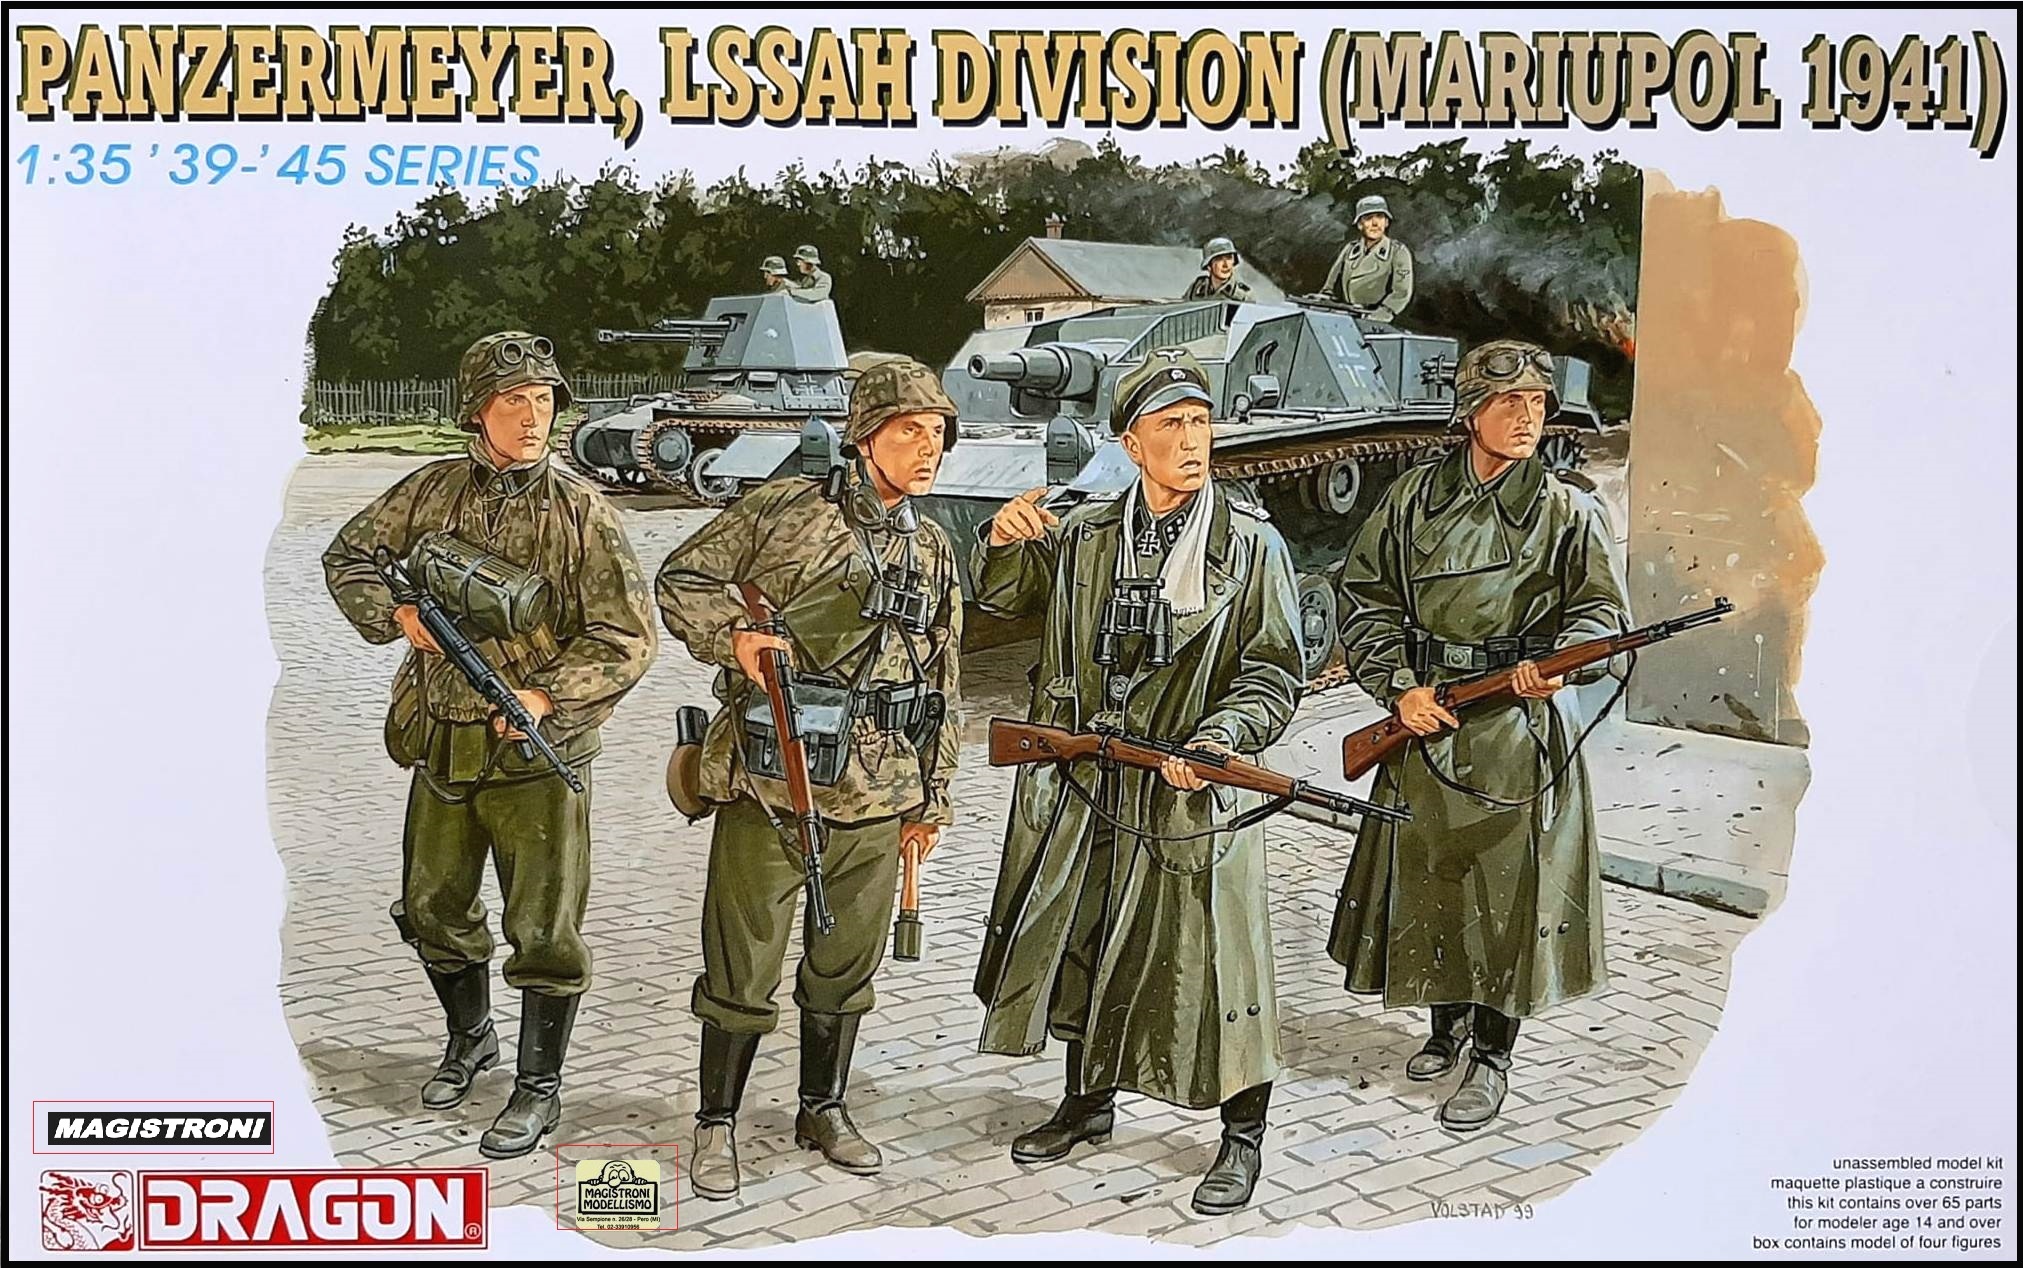 PANZERMAYER LSSAH DIVISION (Mariupol1941)